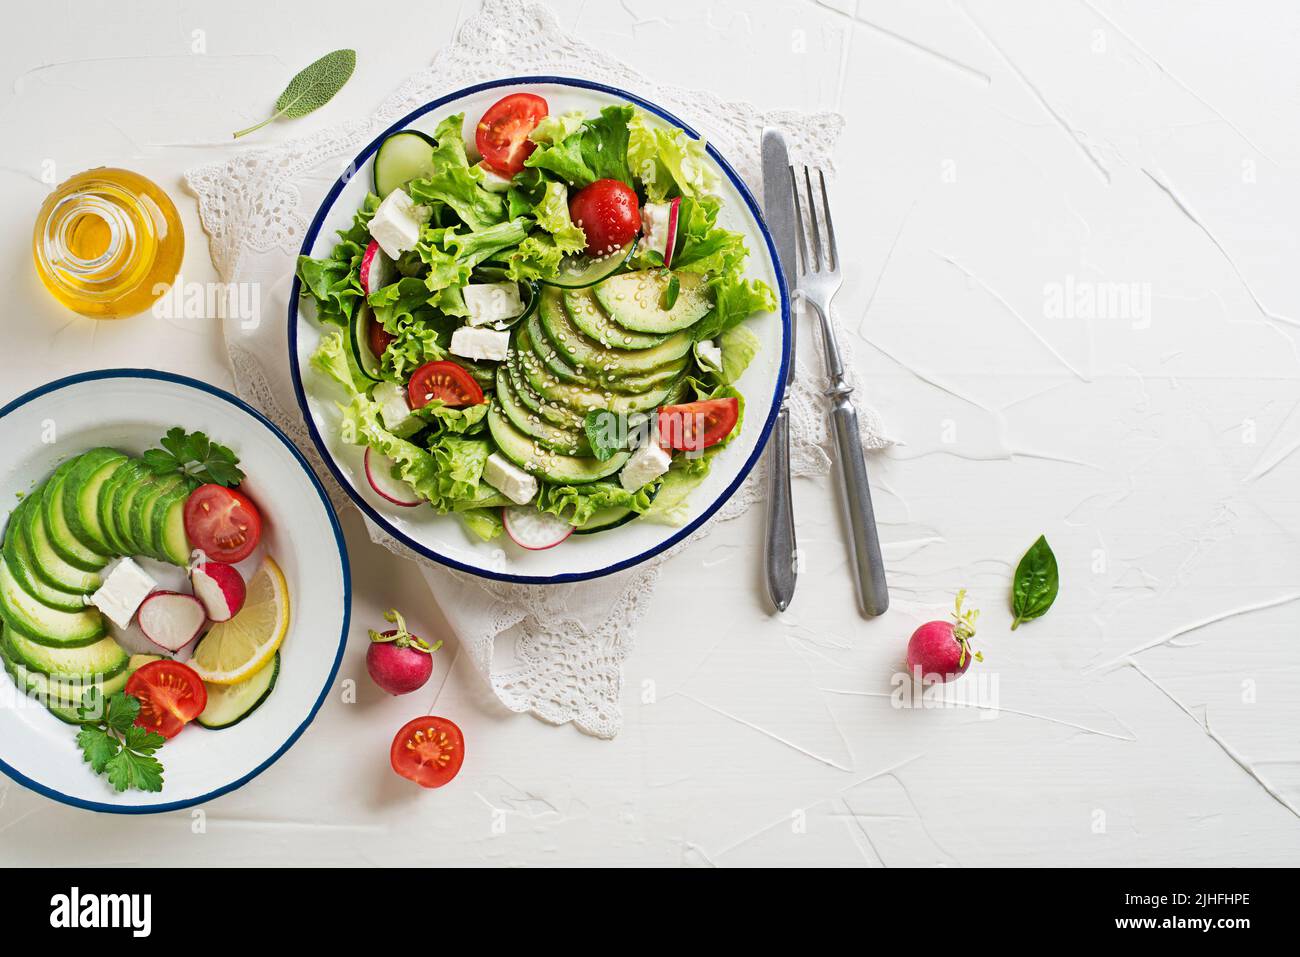 Green salad with avocado, tomato, feta cheese and fresh vegetables Stock Photo